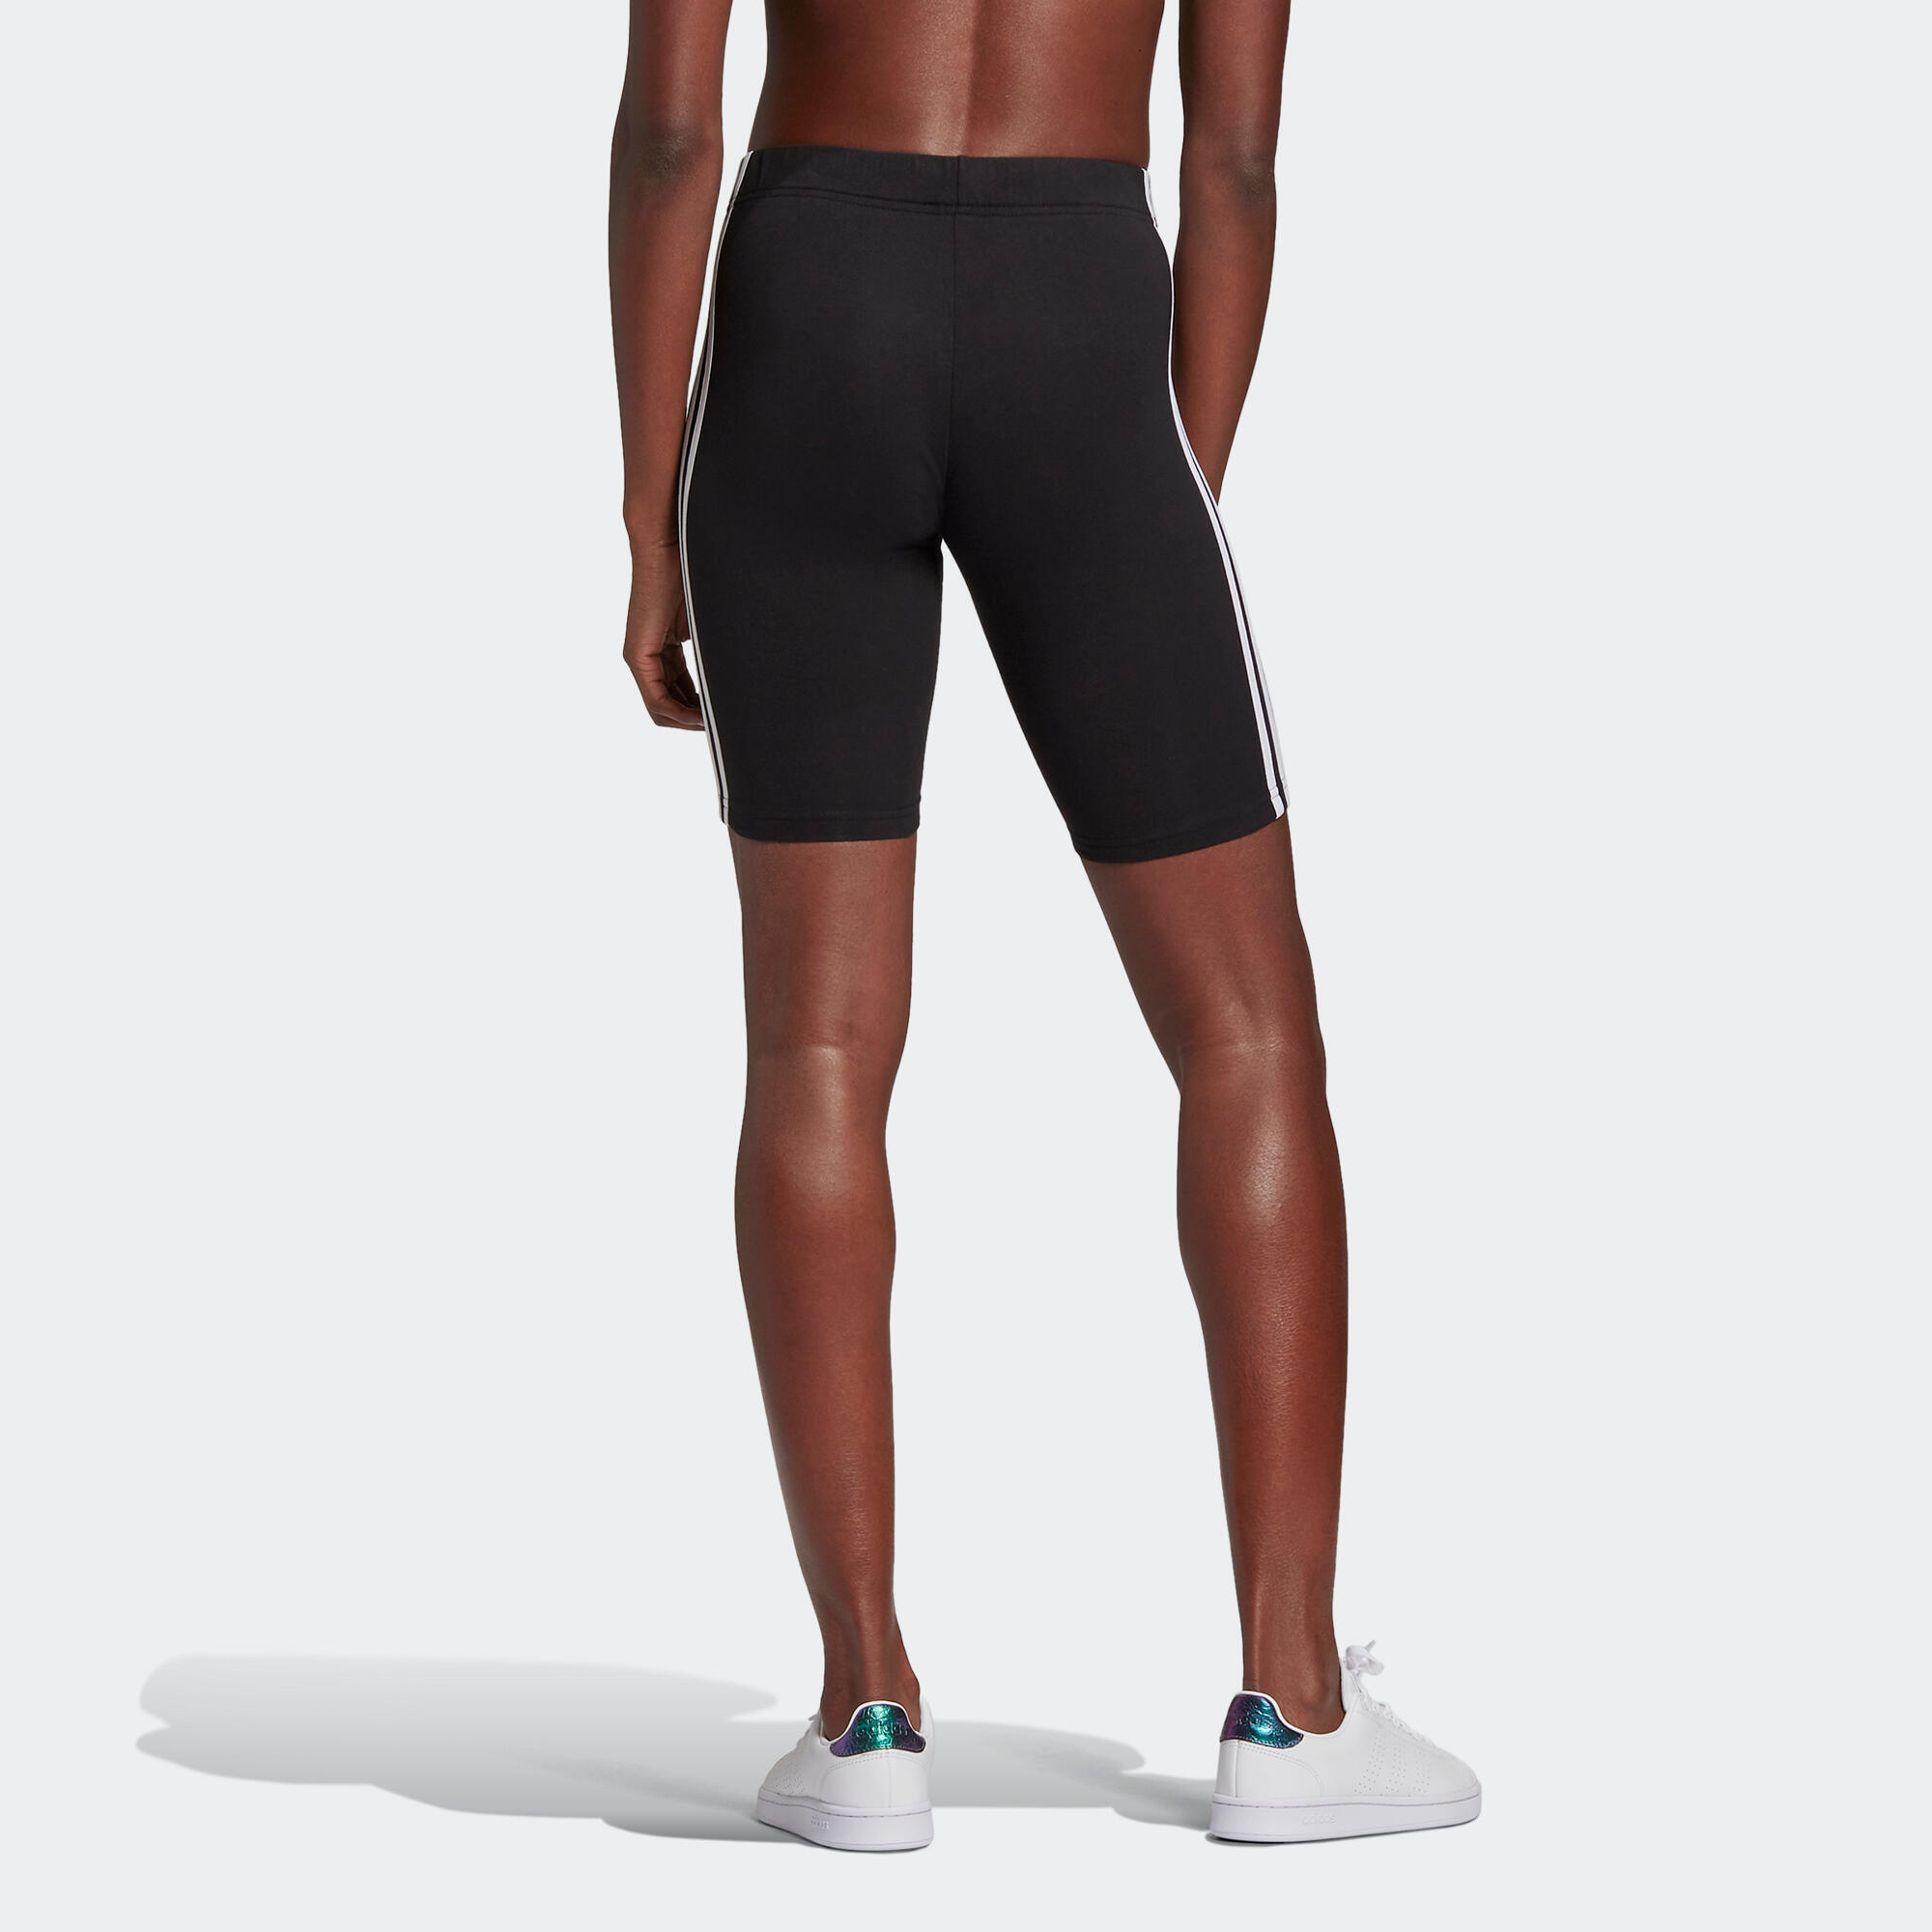 Women's Low-Impact Fitness Shorts - Black 2/6